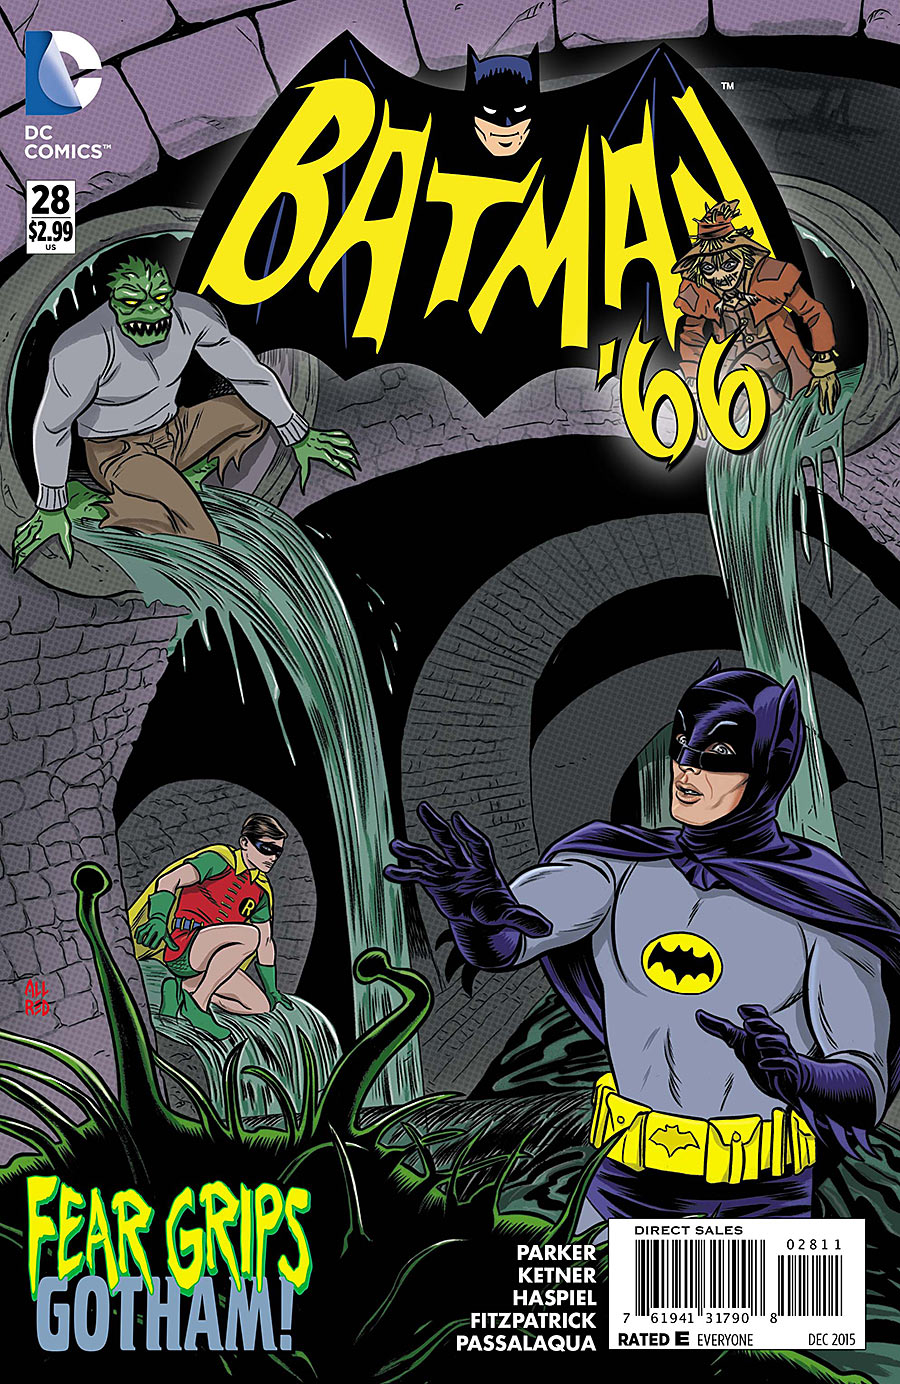 BATMAN 66 #28